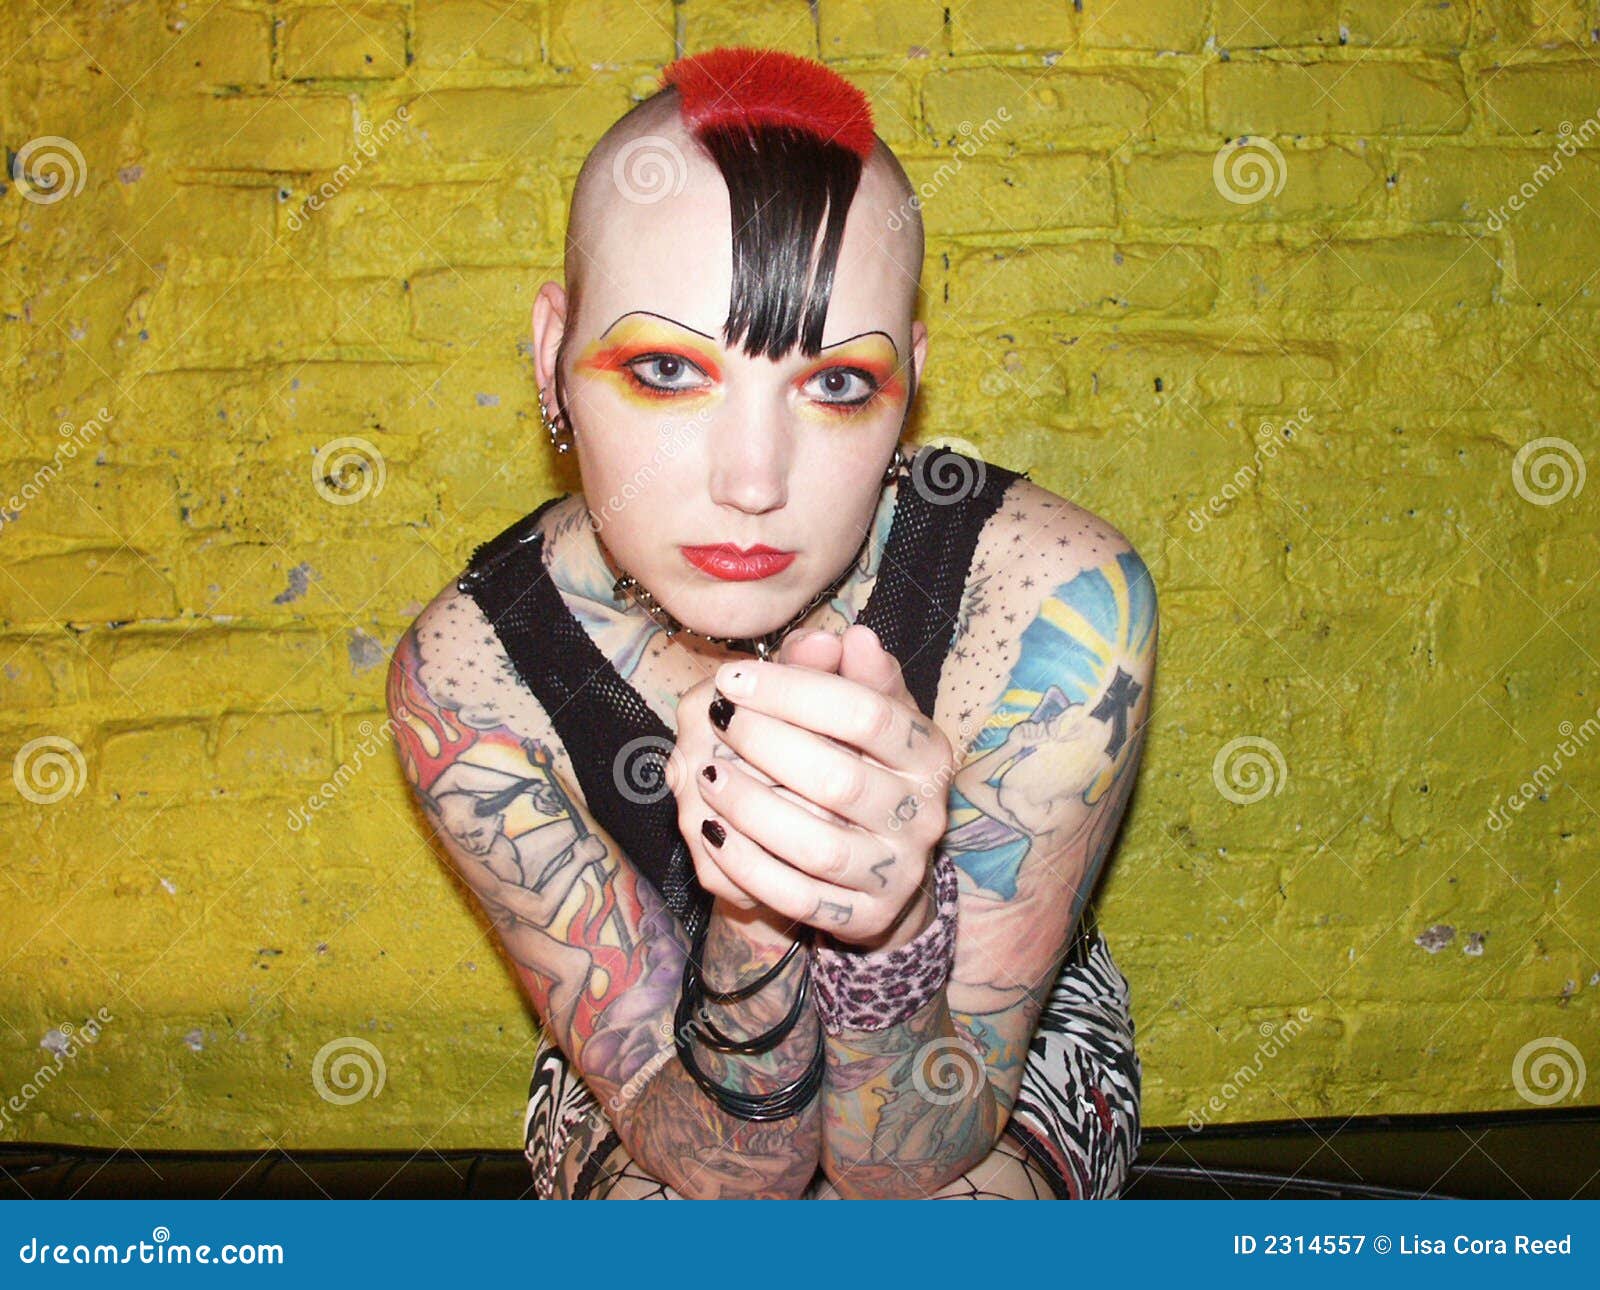 Punk Rock Girl Tattoos